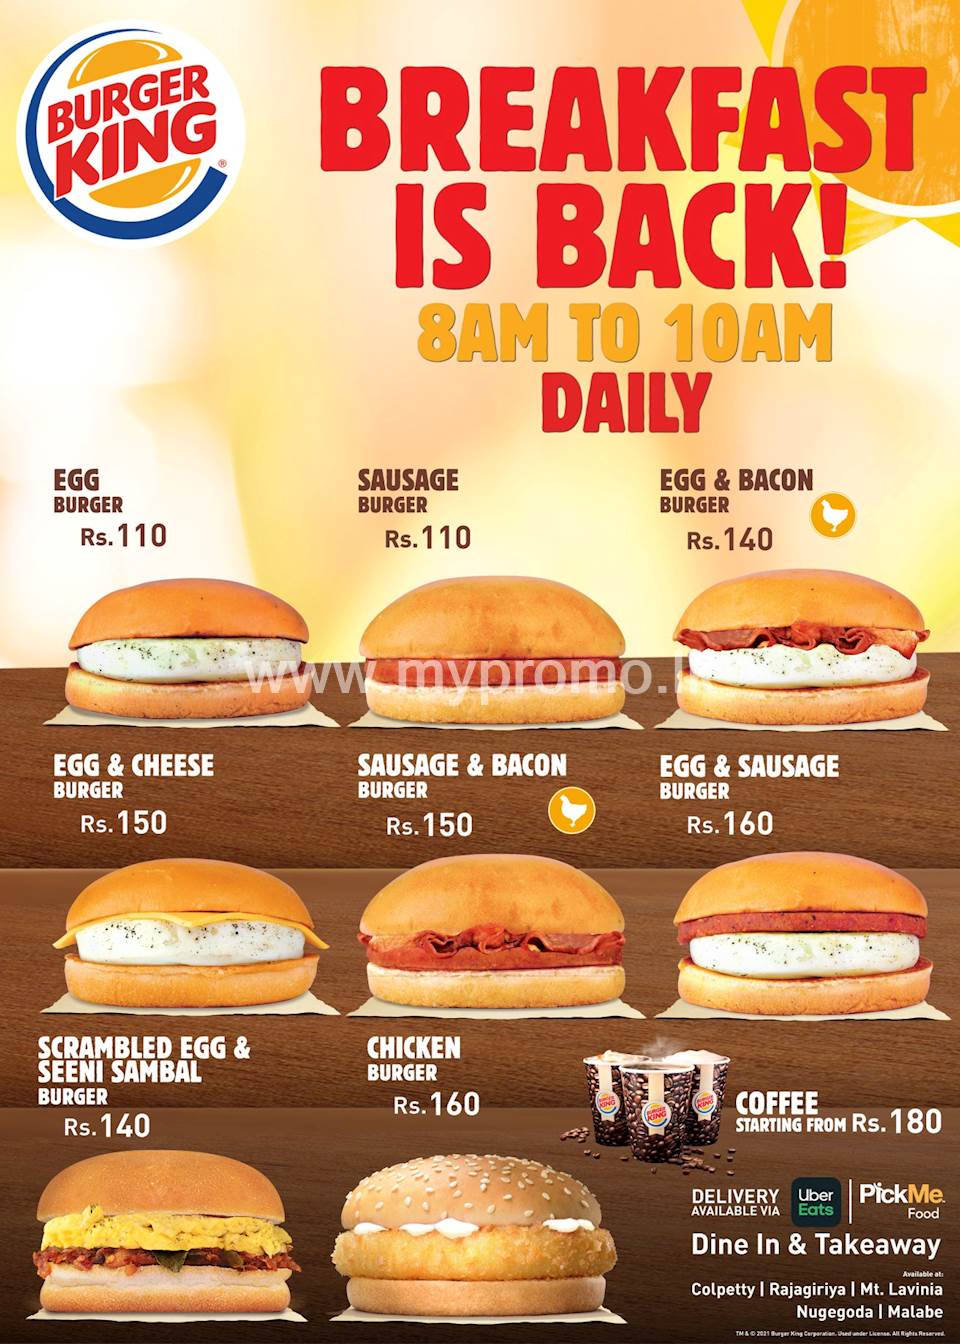 Burger King Breakfast is back on the menu!